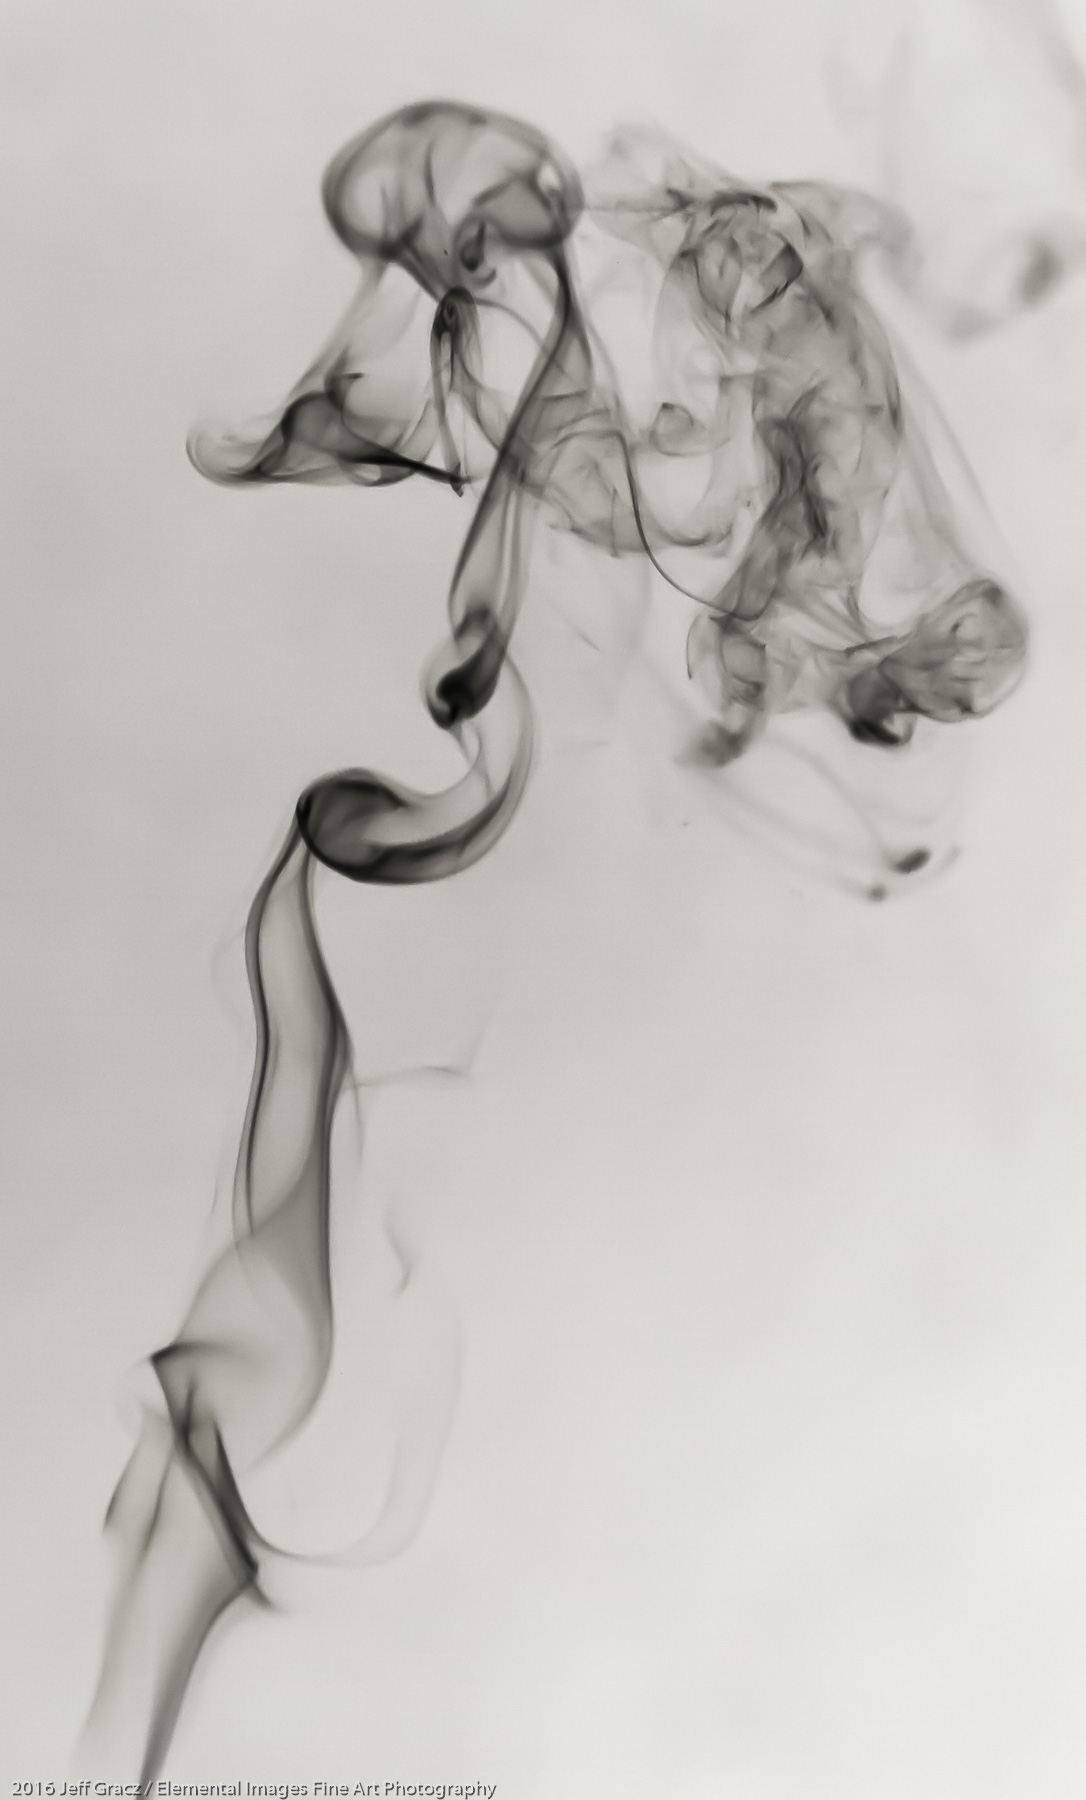 Smoke 20 | Vancouver | WA | USA - © 2016 Jeff Gracz / Elemental Images Fine Art Photography - All Rights Reserved Worldwide